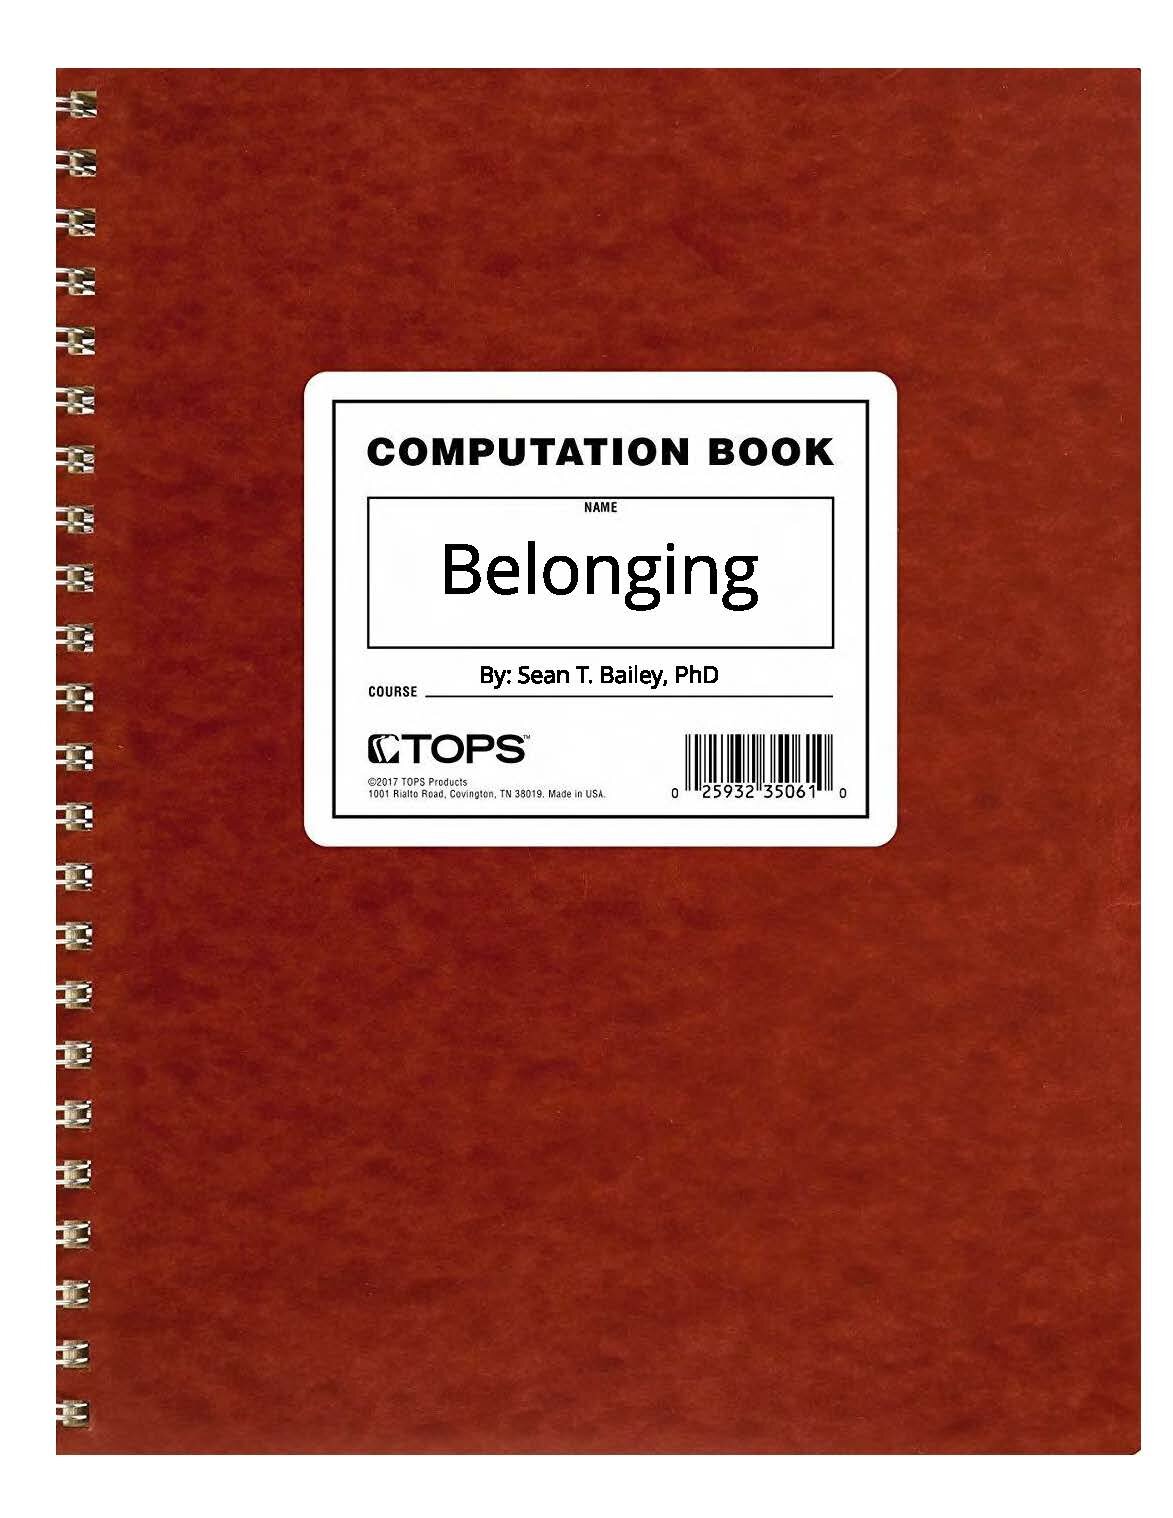 Belonging - Booklet (FINAL_Jpeg)_Page_01.jpg